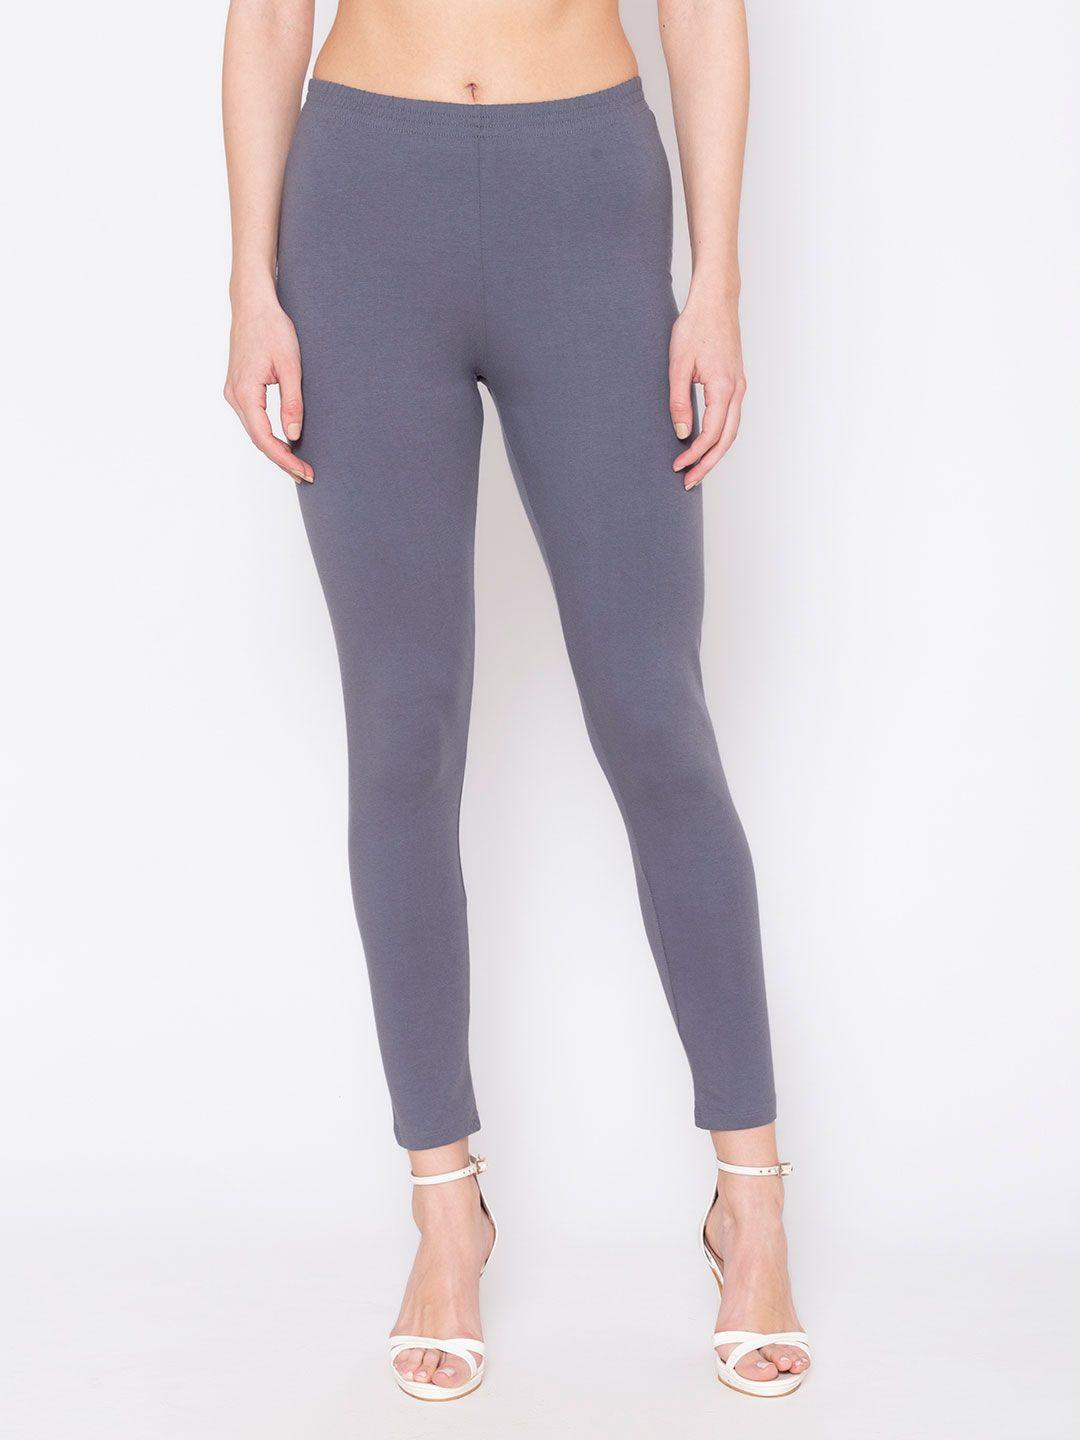 groversons paris beauty women grey solid cotton ankle-length leggings